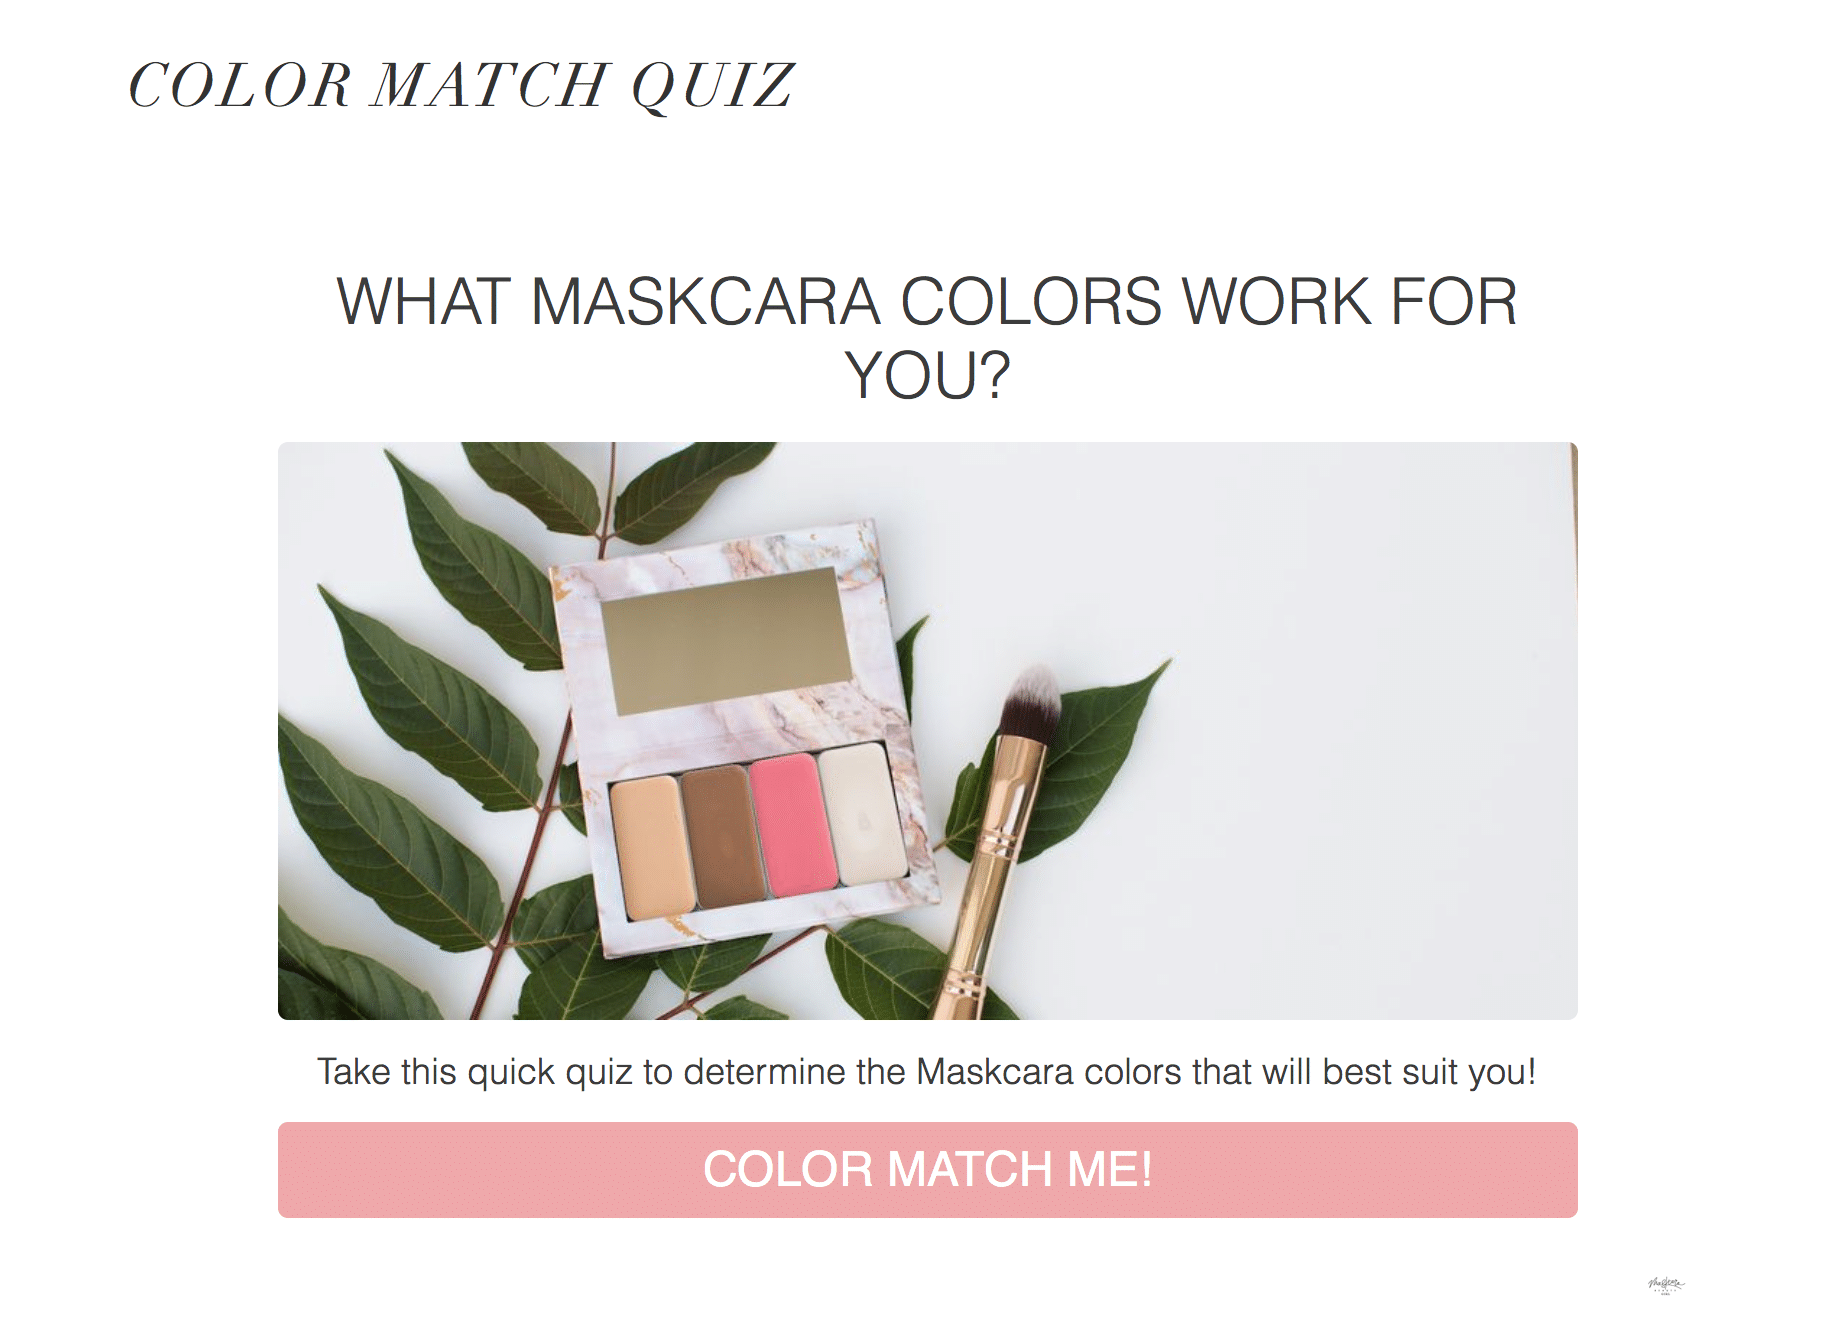 The Correct Way to Do a Maskcara Color Match